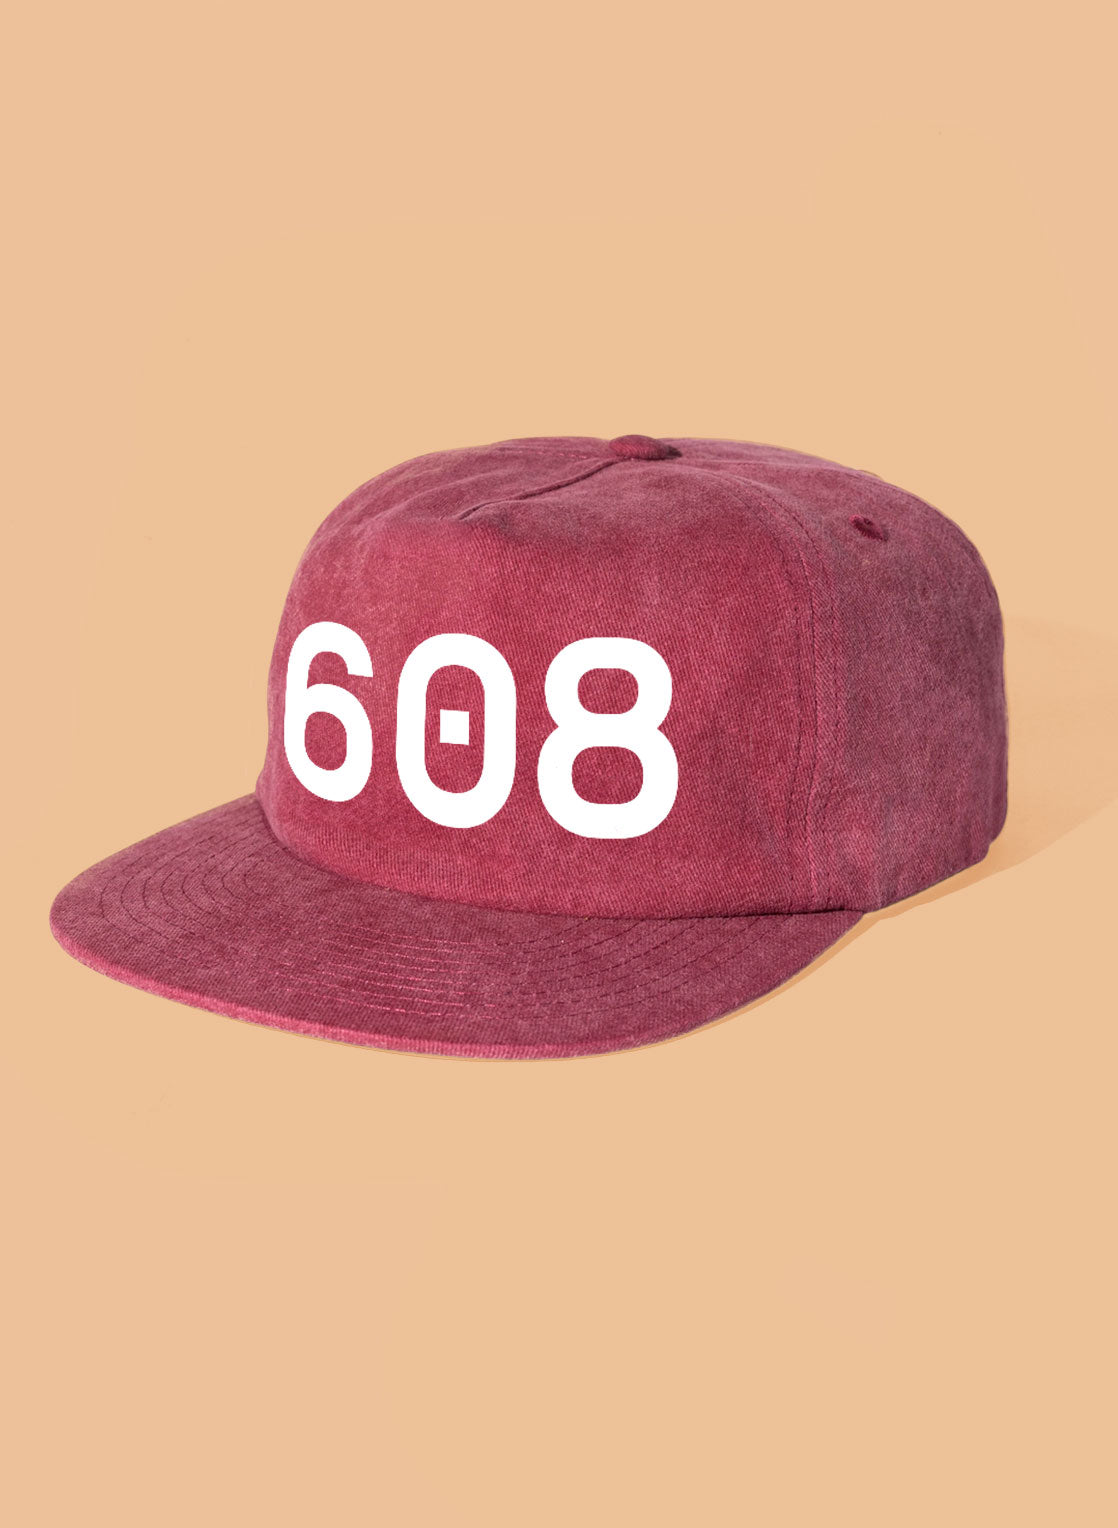 608 / Field Trip Hat